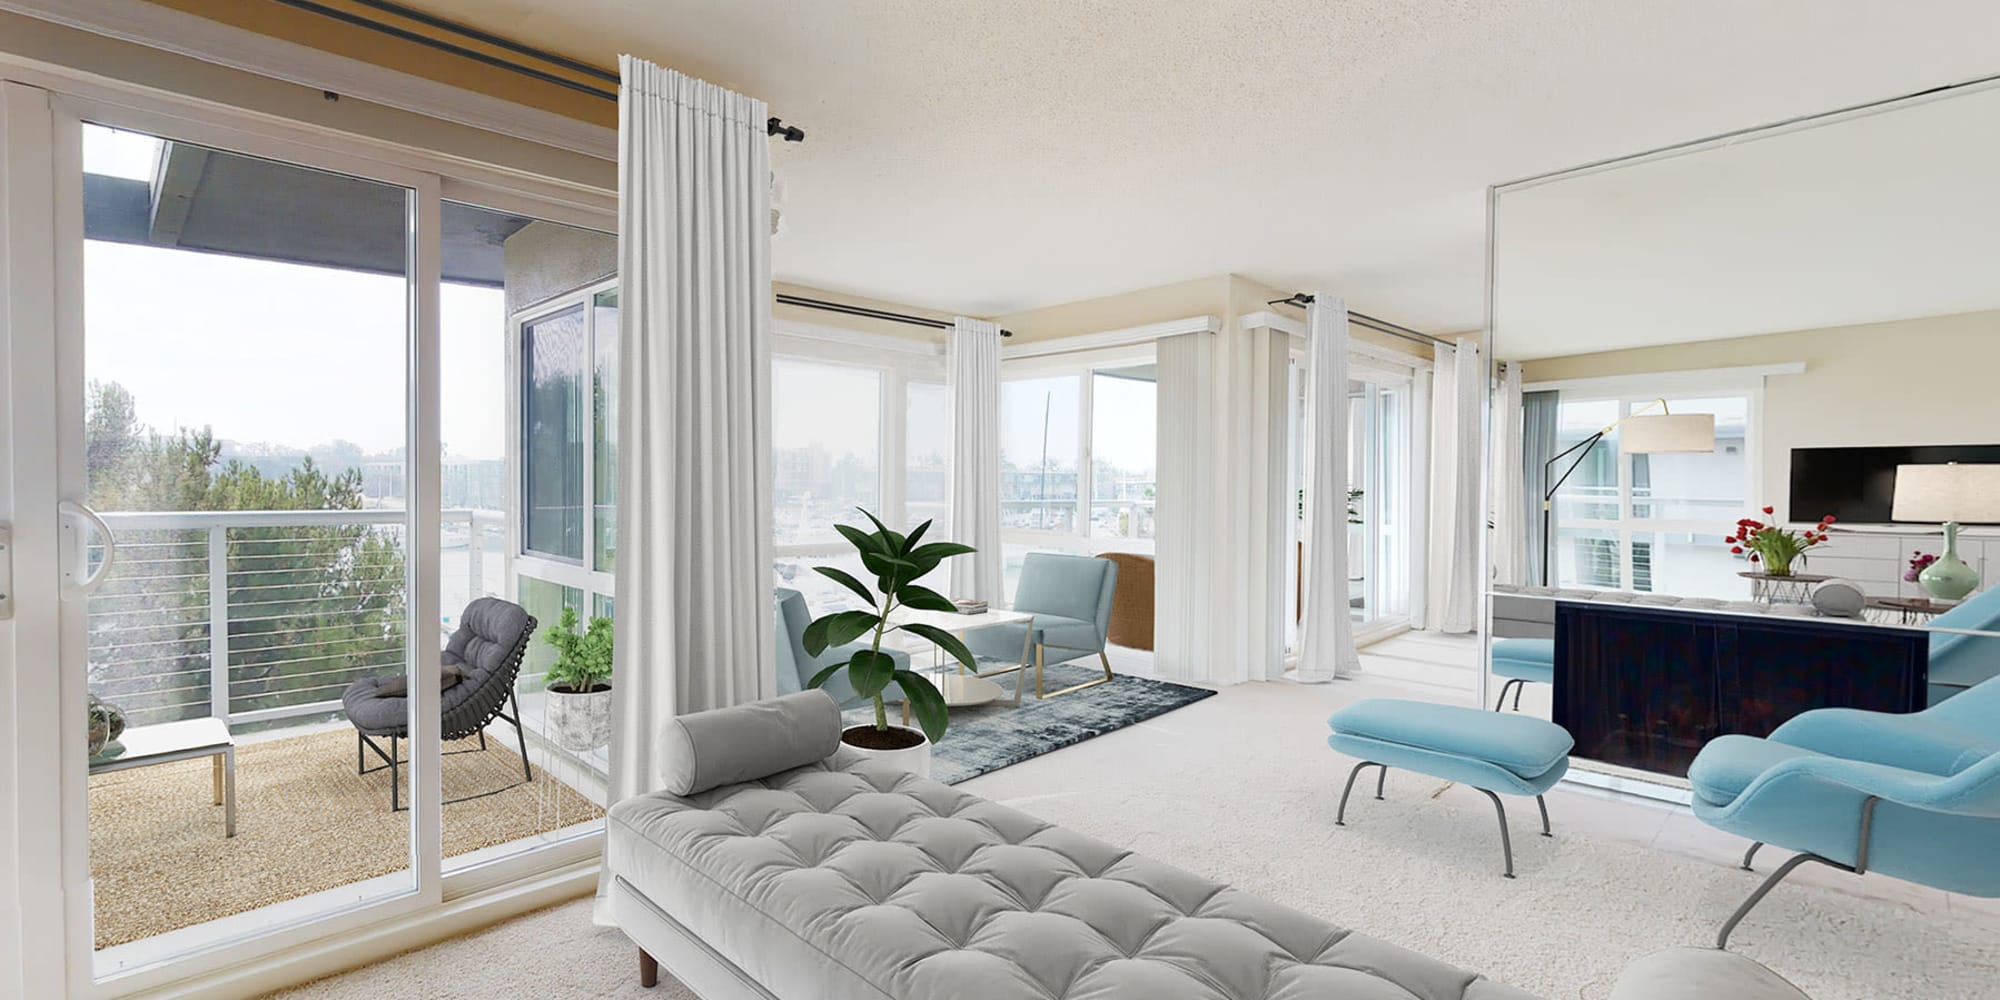 Take a virtual tour of our apartment homes at The Tides at Marina Harbor in Marina del Rey, California